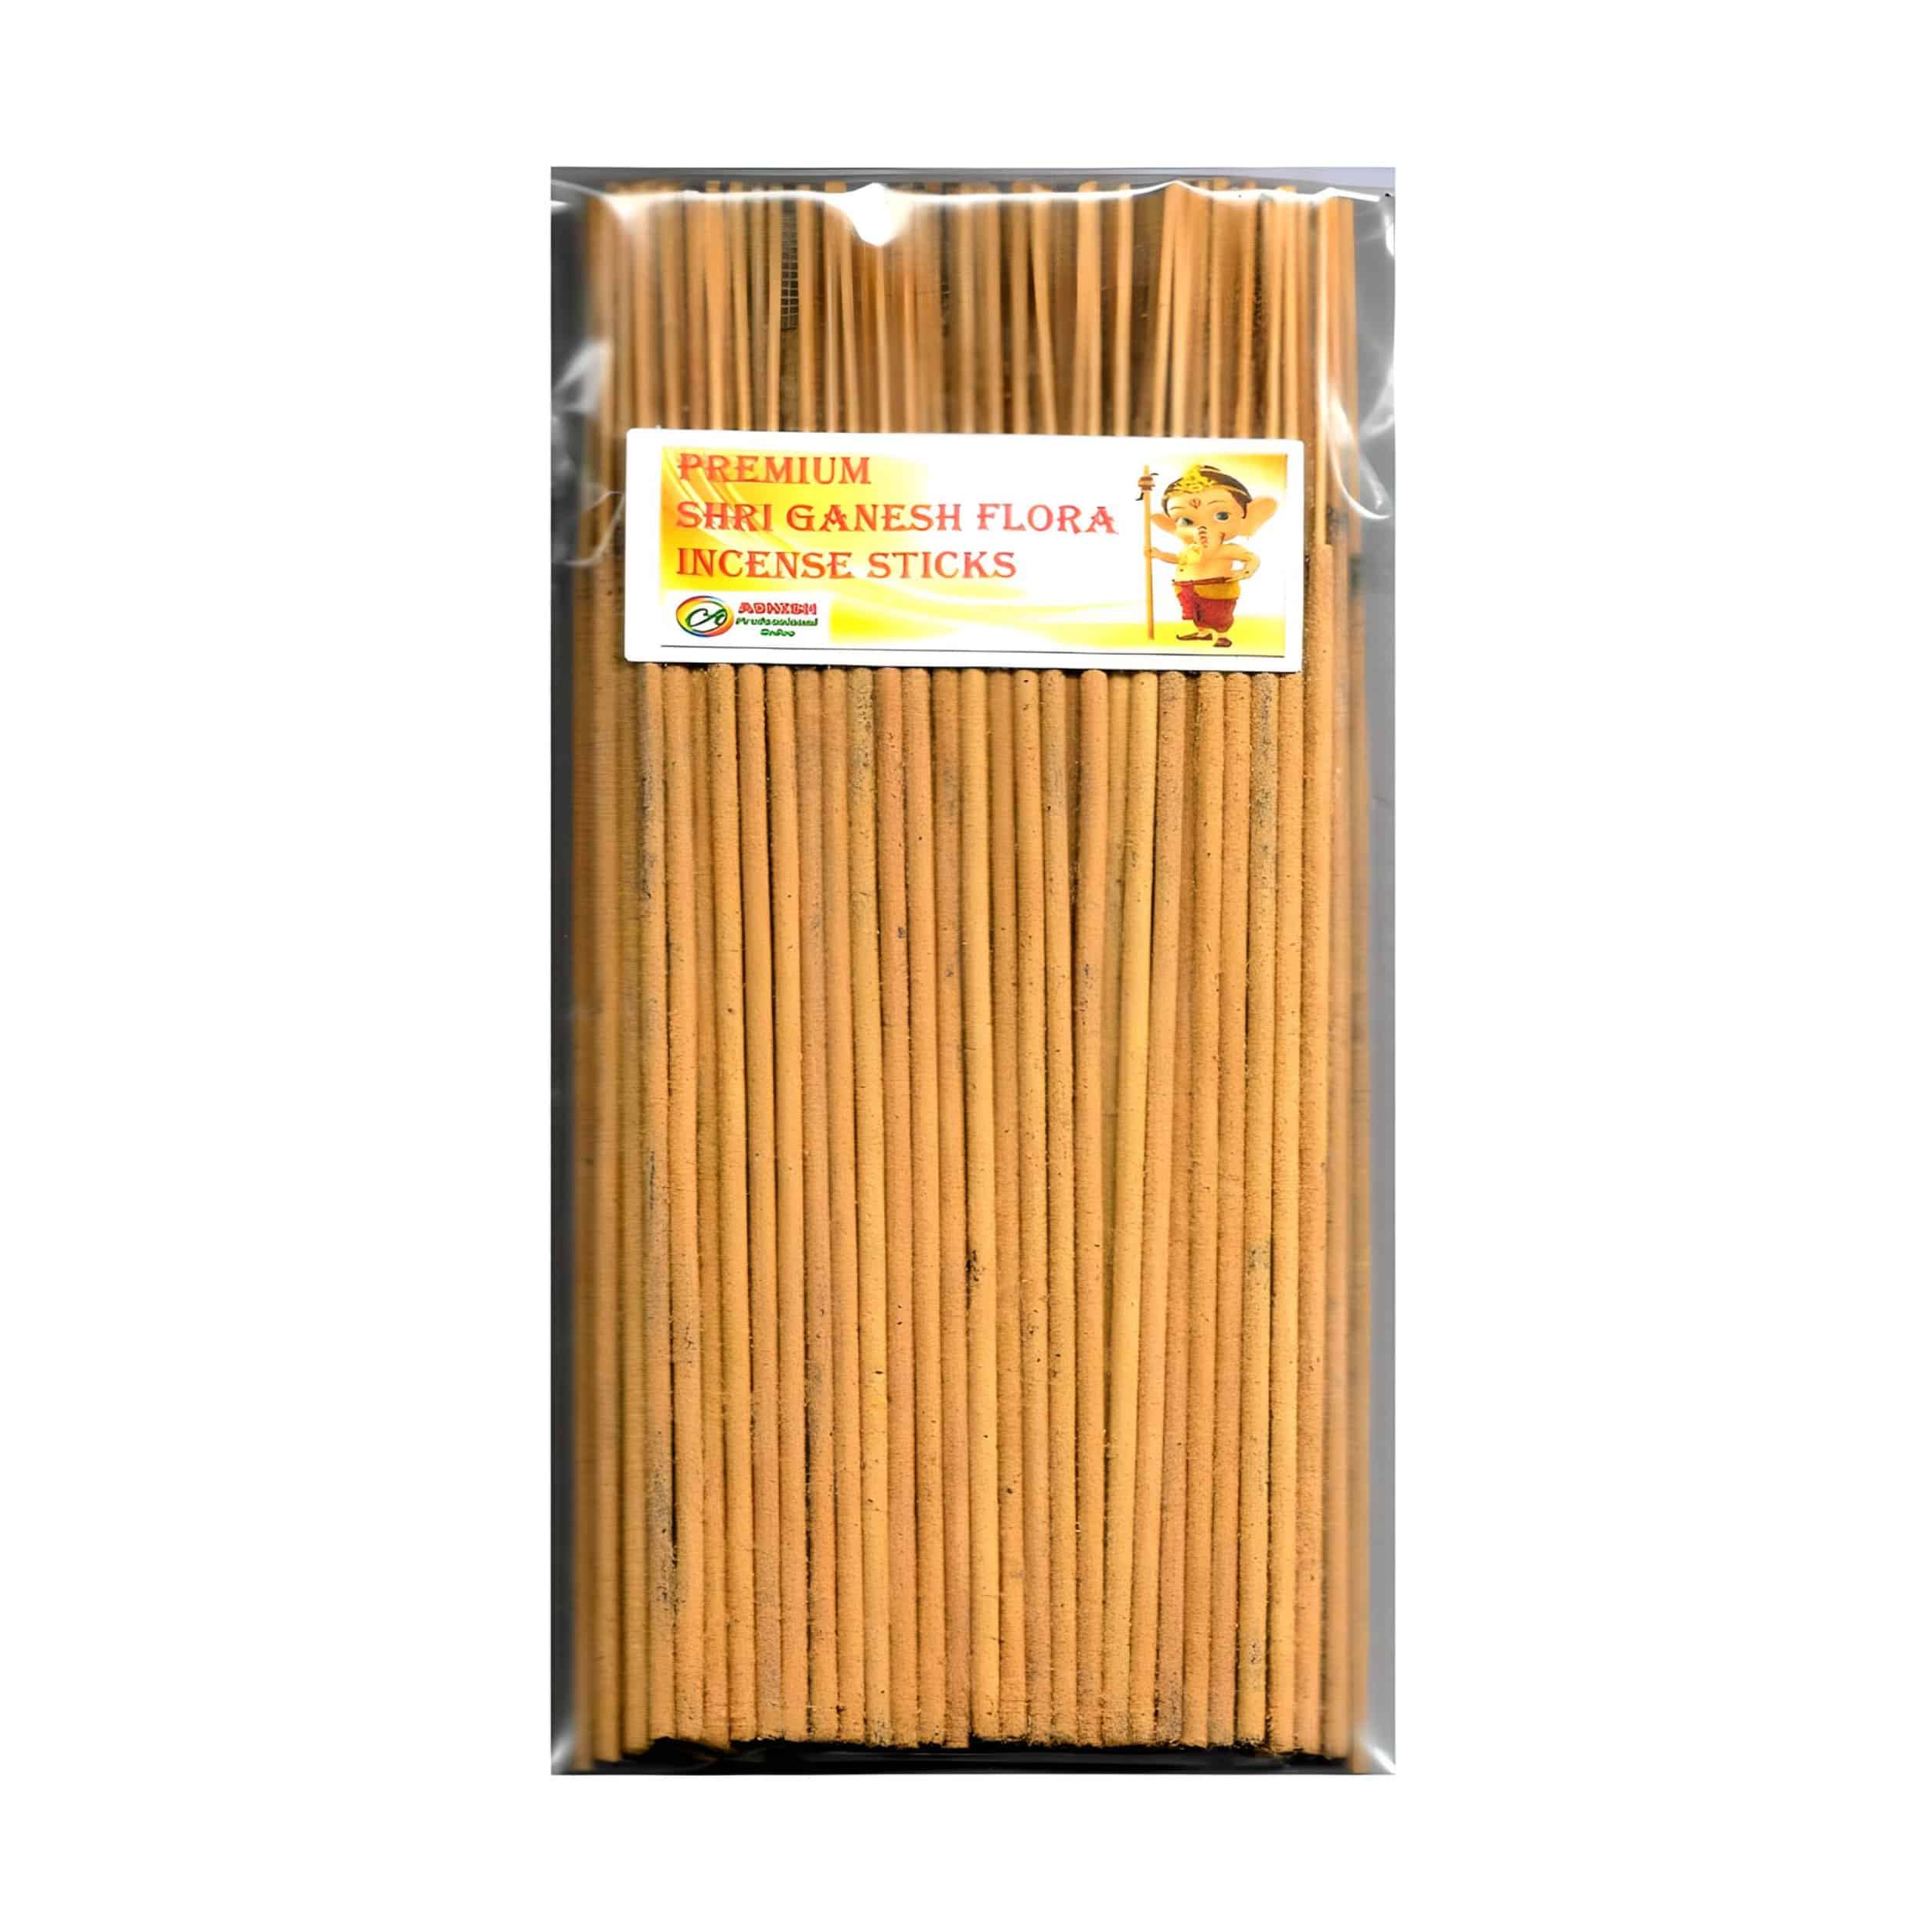 Shree Ganesh Flora Agarbatti Incense sticks